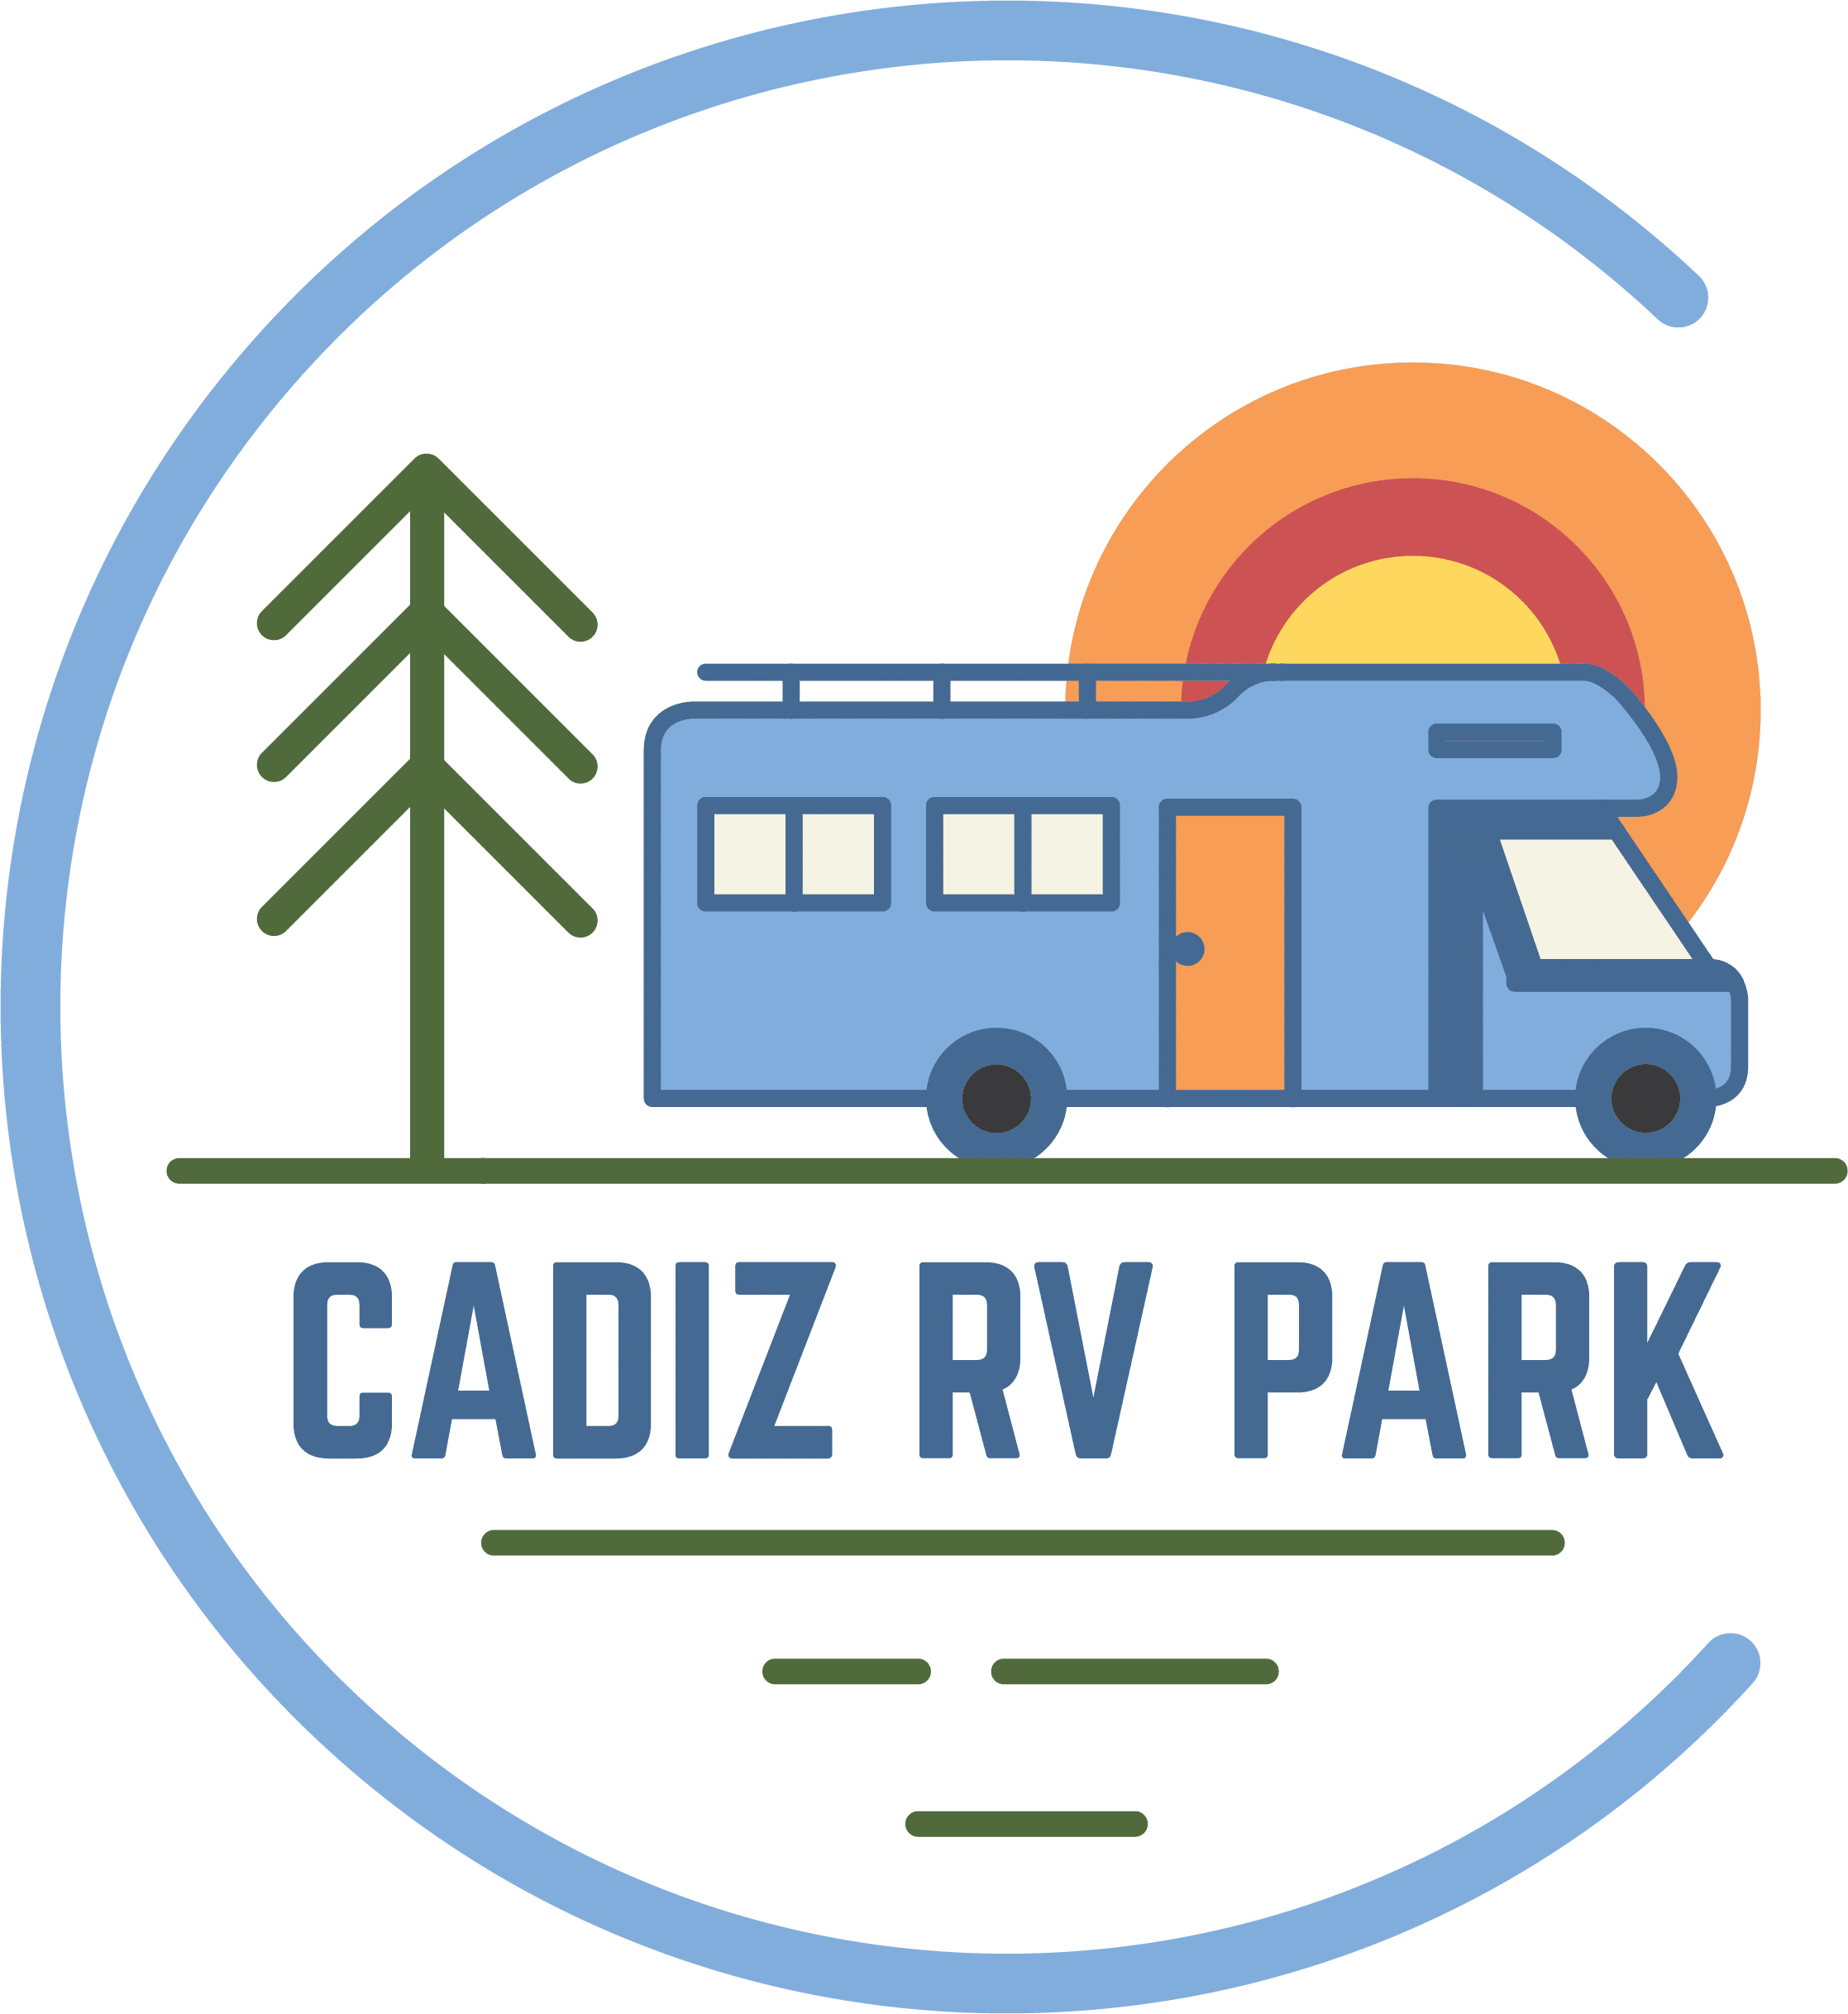 Cadiz RV Park